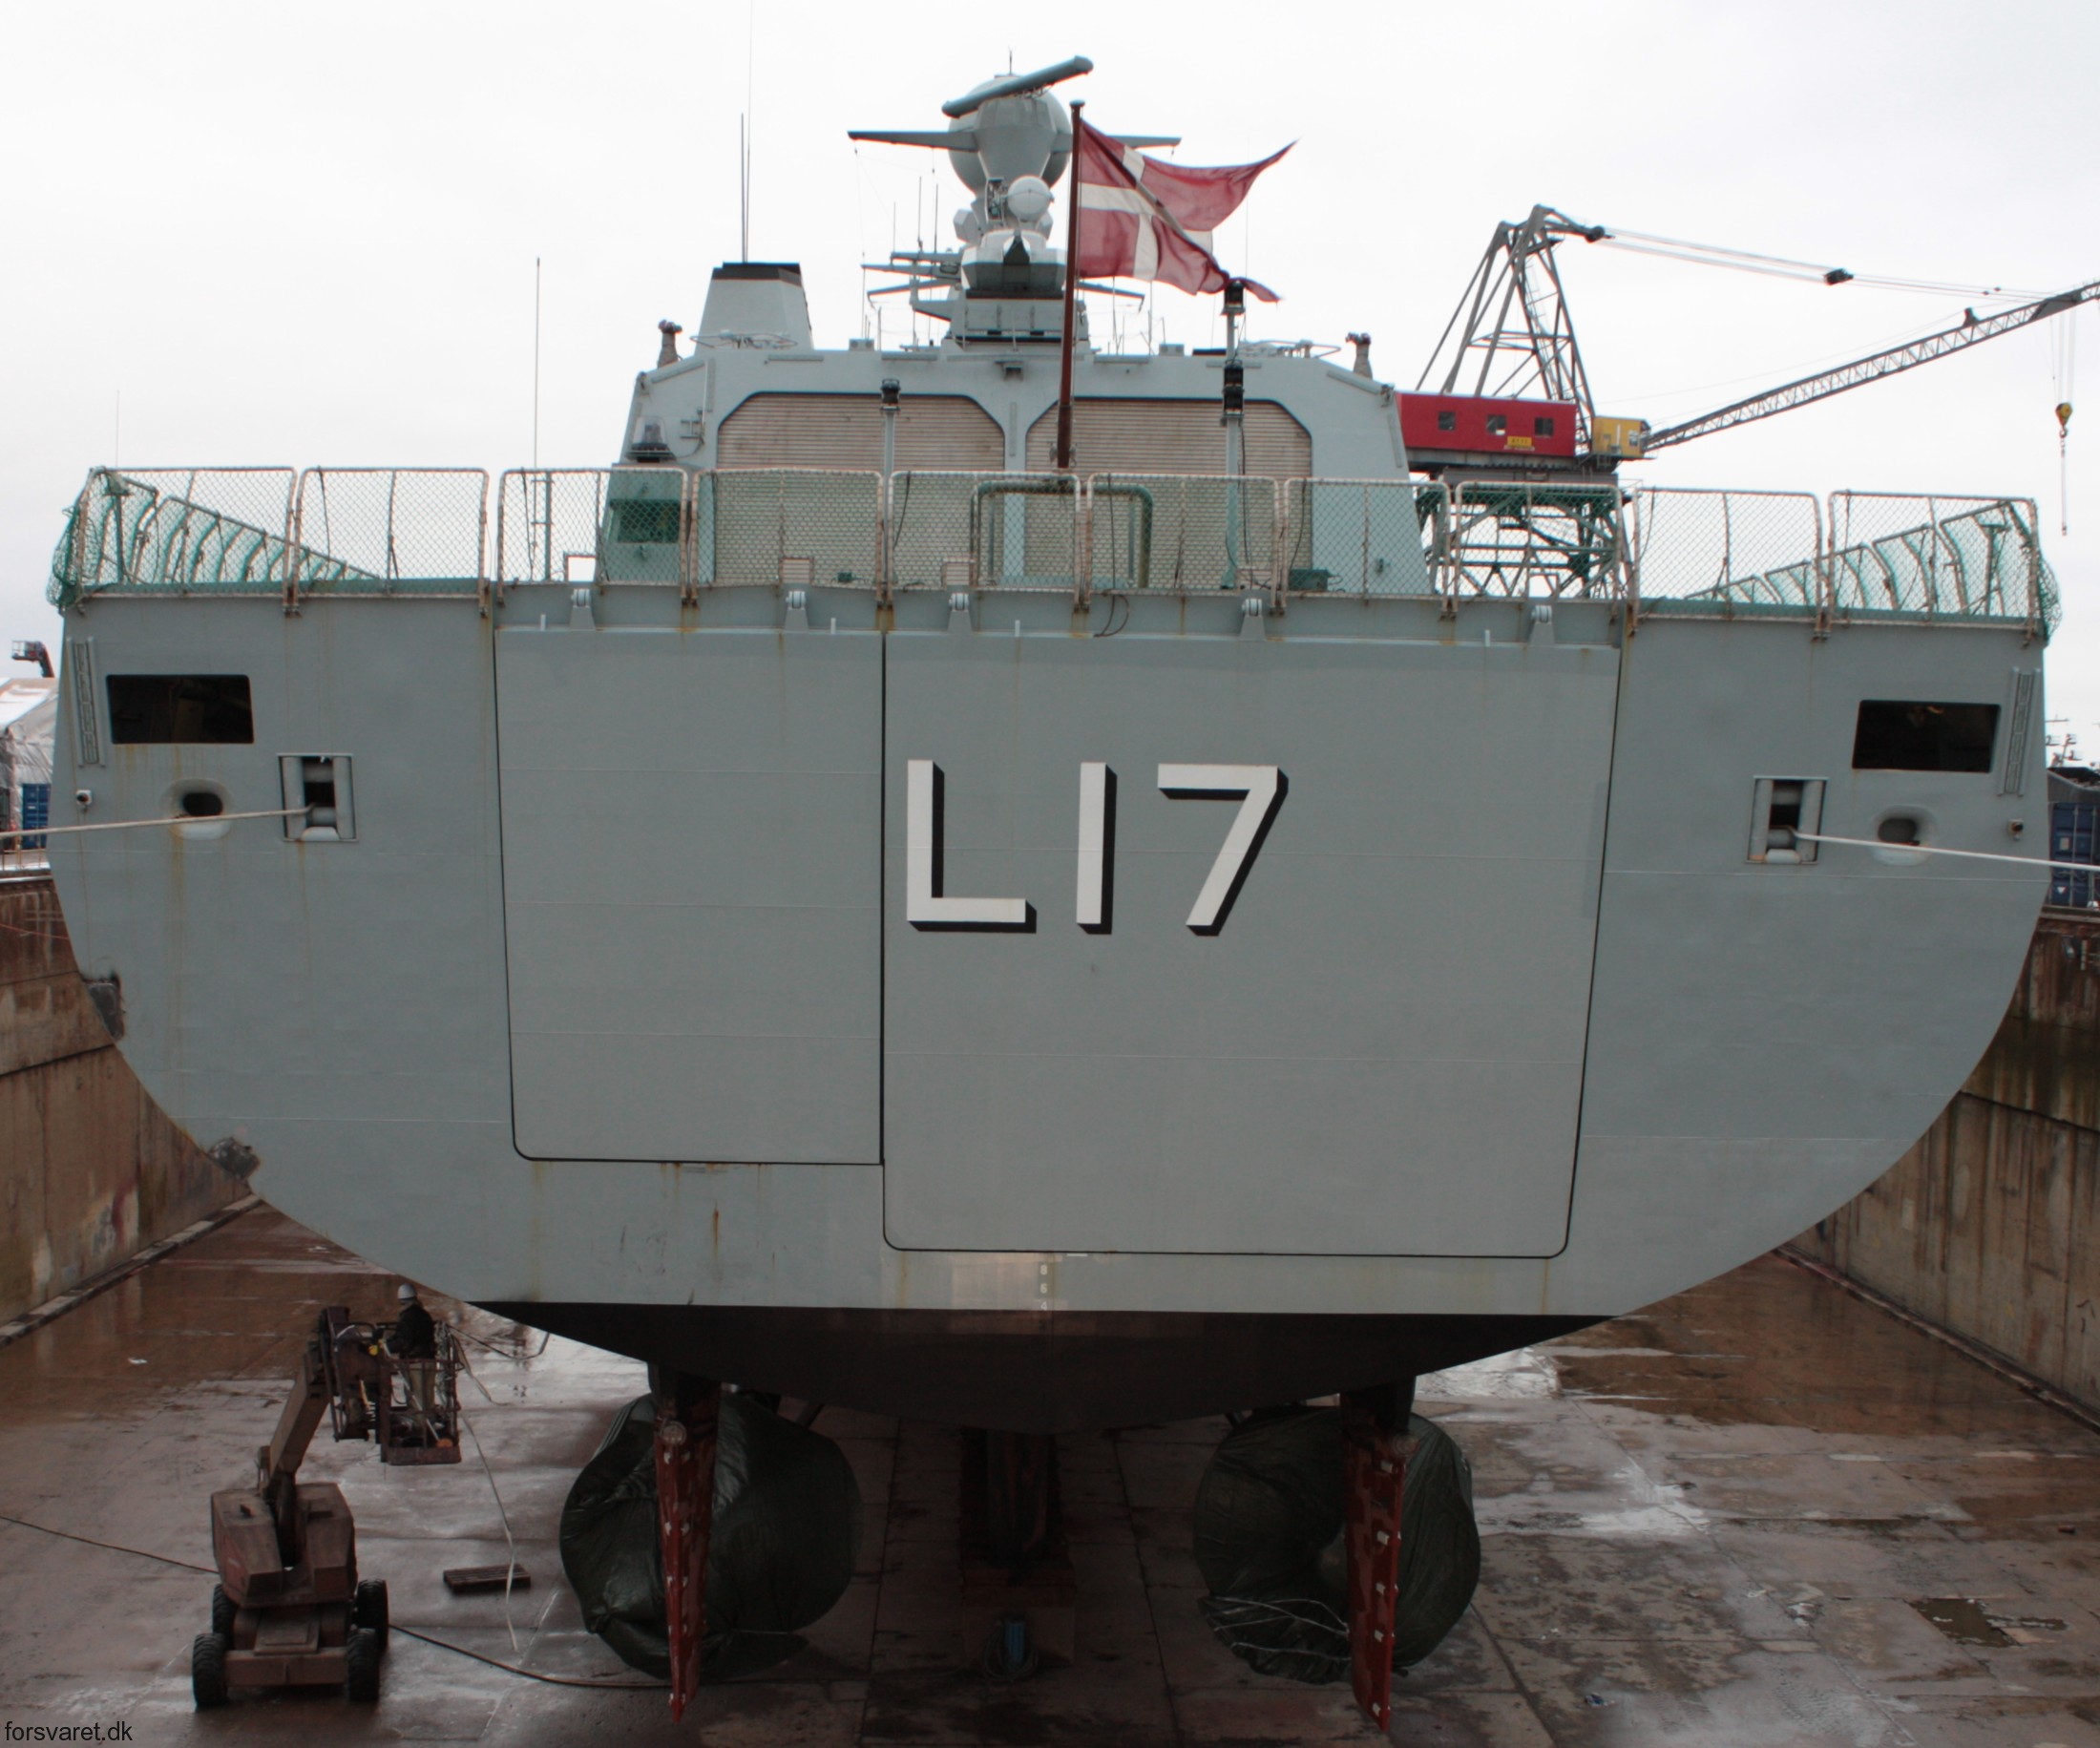 f-342 hdms esbern snare l-17 frigate command support ship royal danish navy 17 dry dock